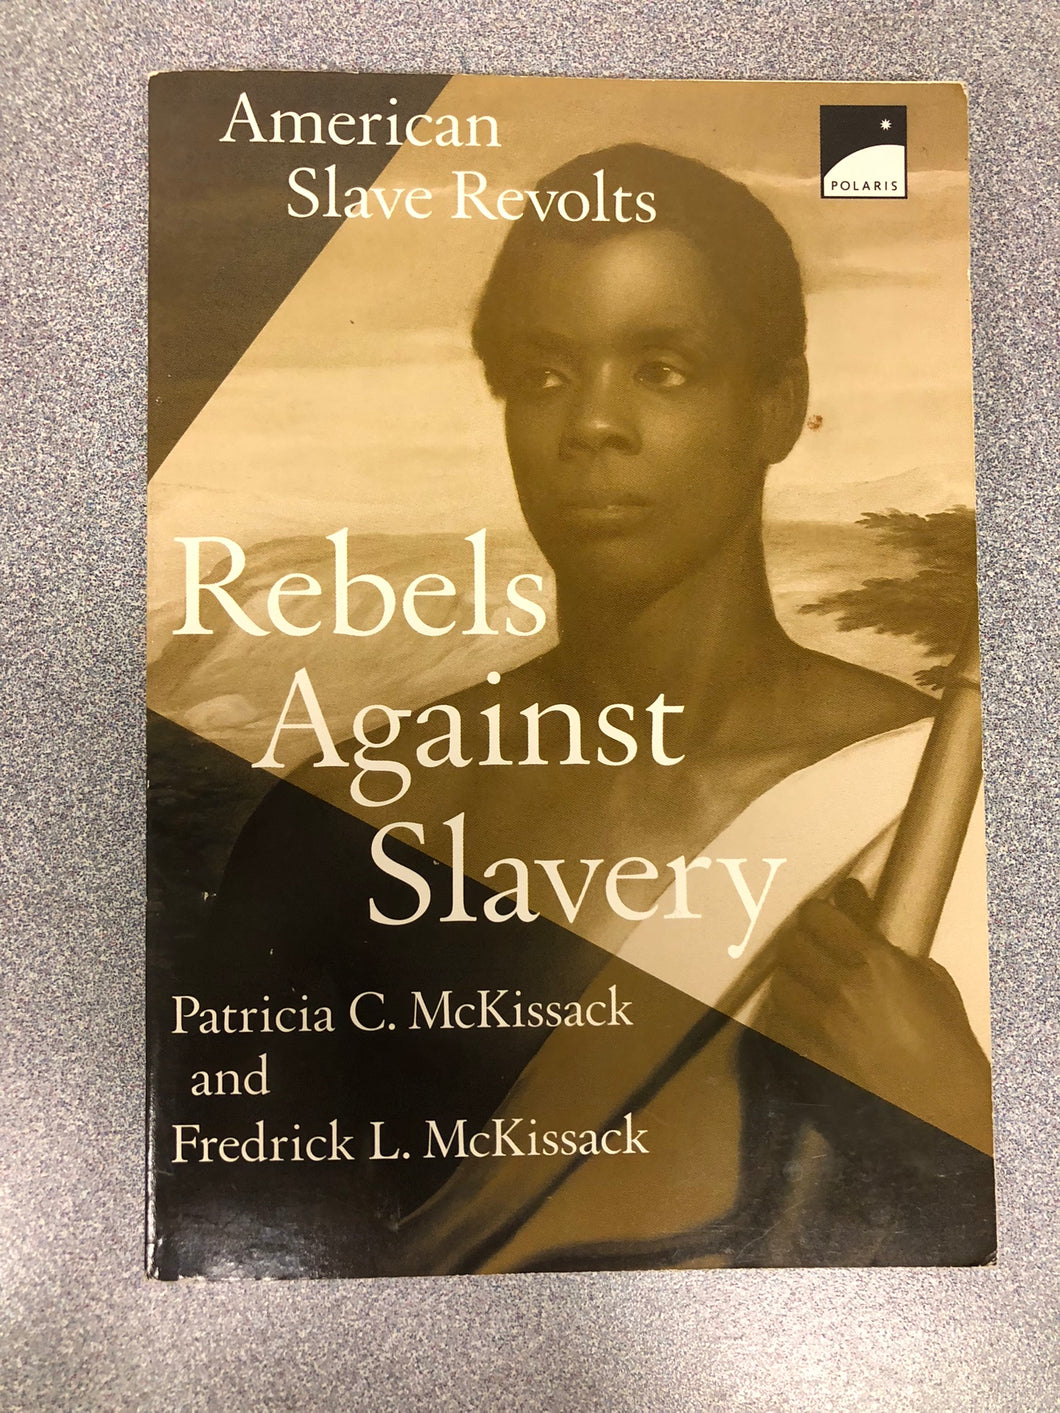 Rebels Against Slavery, McKissack, Patricia C. and Fredrick L. McKissack [1999] CN 9/22